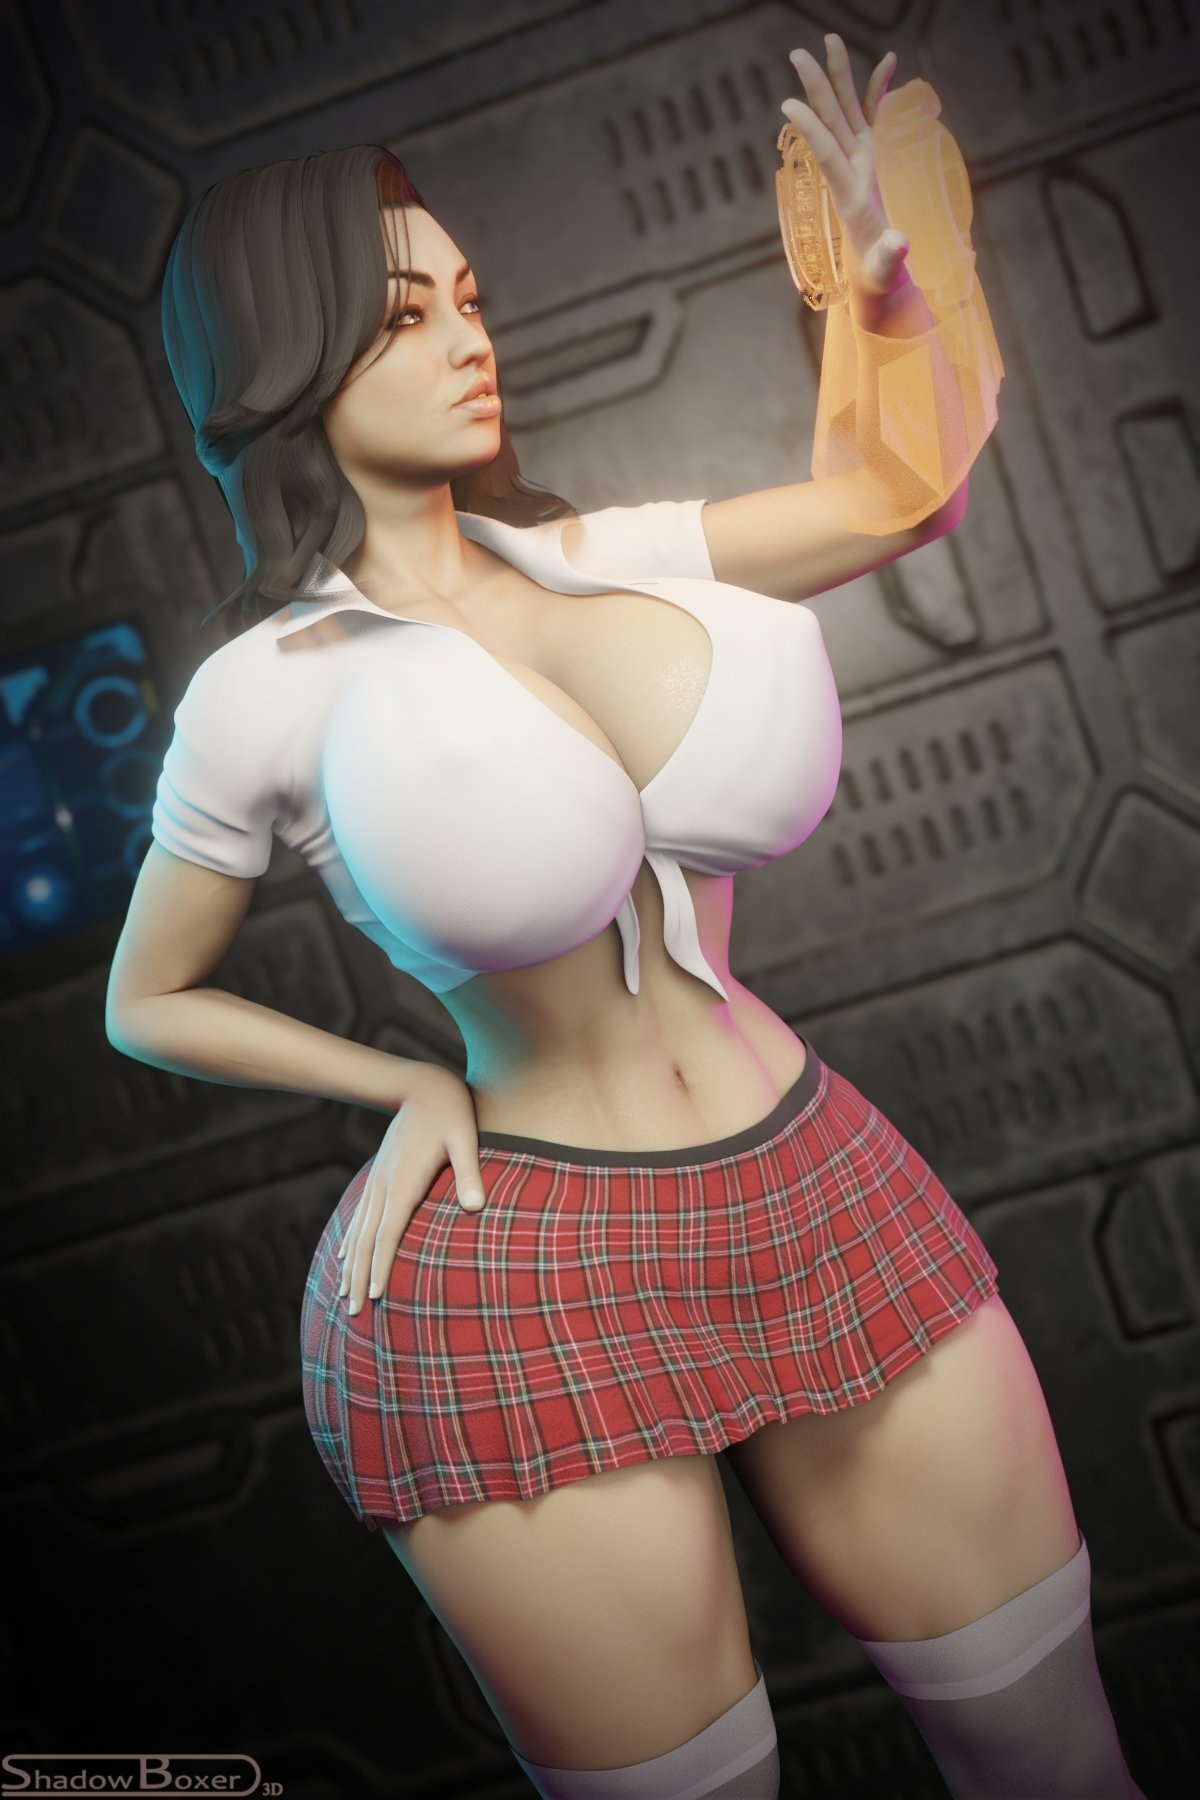 Miranda 👀 Miranda Lawson Mass Effect Nipples Pussy Lingerie Boobs Ass Cake Big Ass Big Tits Tits Sexy Horny Face Horny 3d Porn